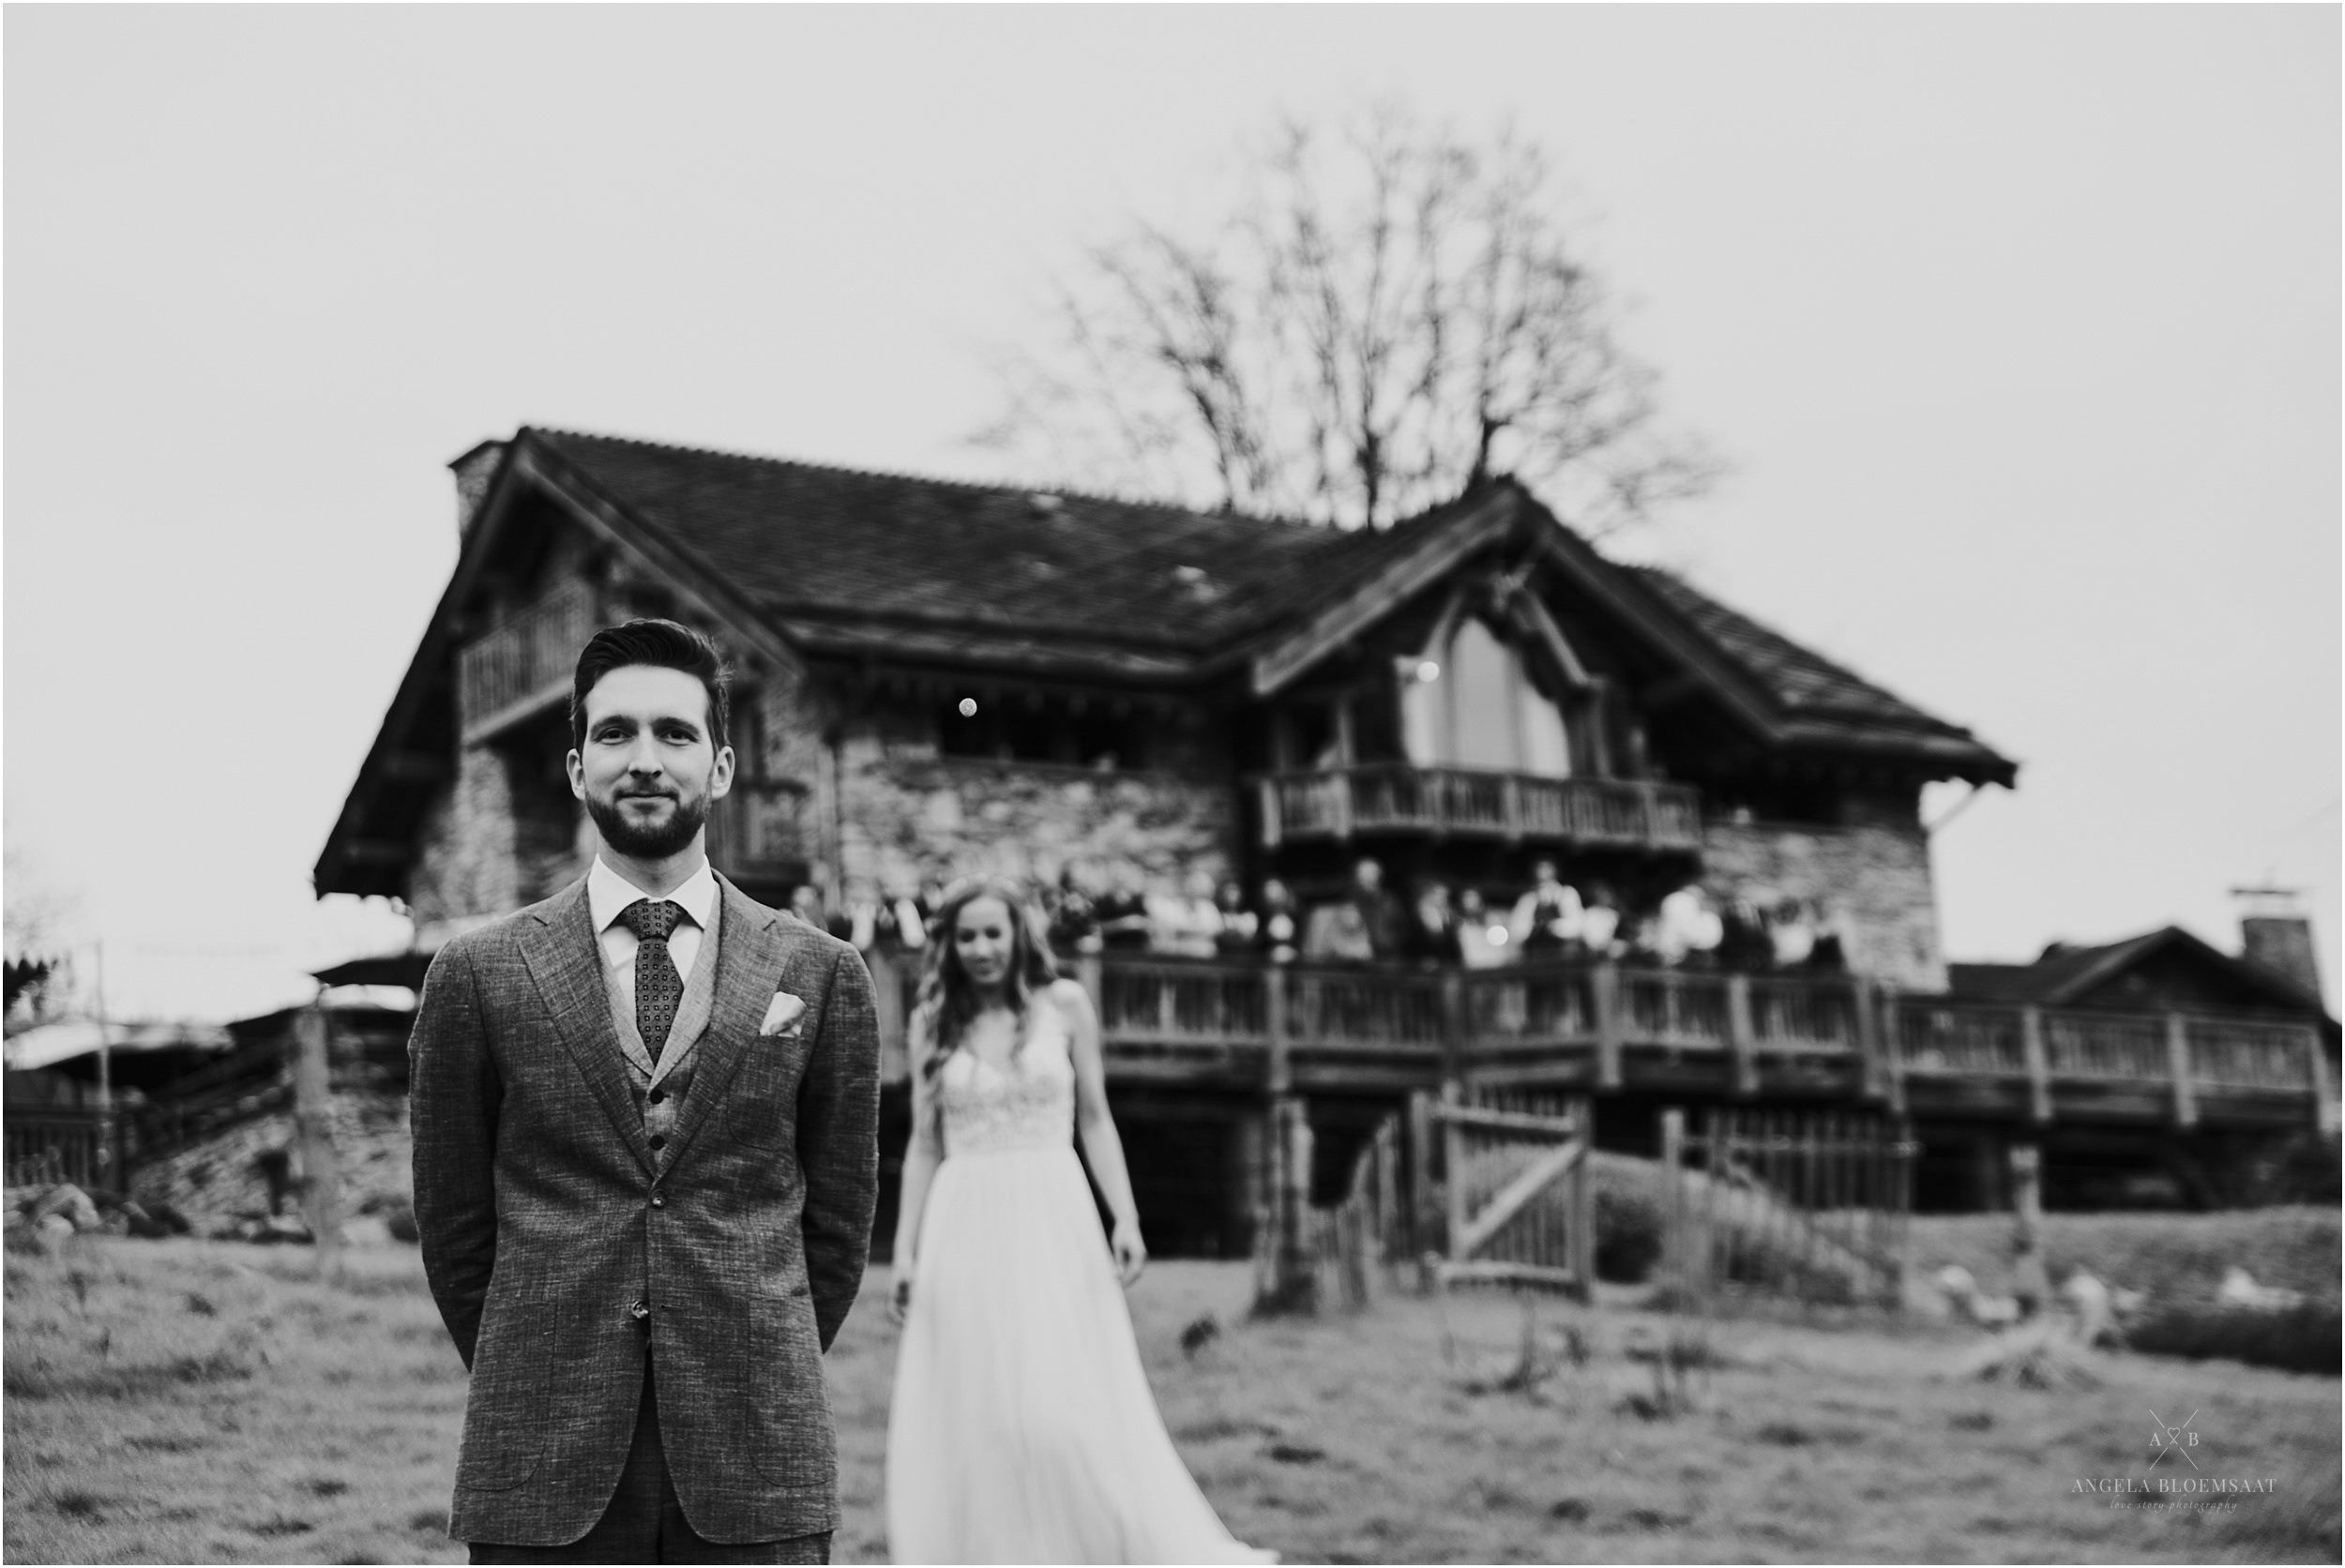 Destination wedding belgium ardennen - Ardennes - Angela Bloemsaat Love Story Photography